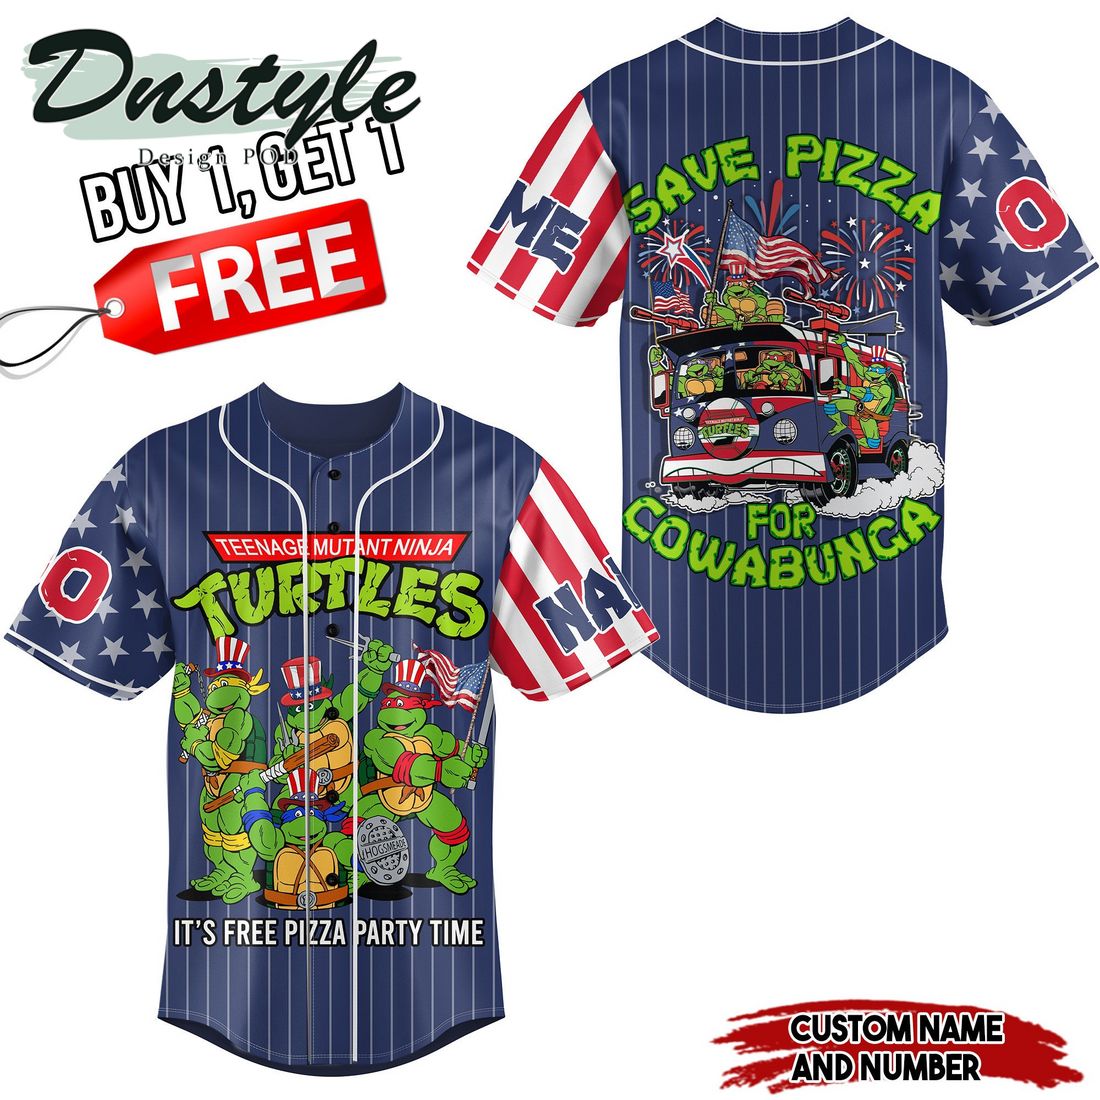 Teenage Mutant Ninja Turtles it’s free pizza party time personalized baseball jersey